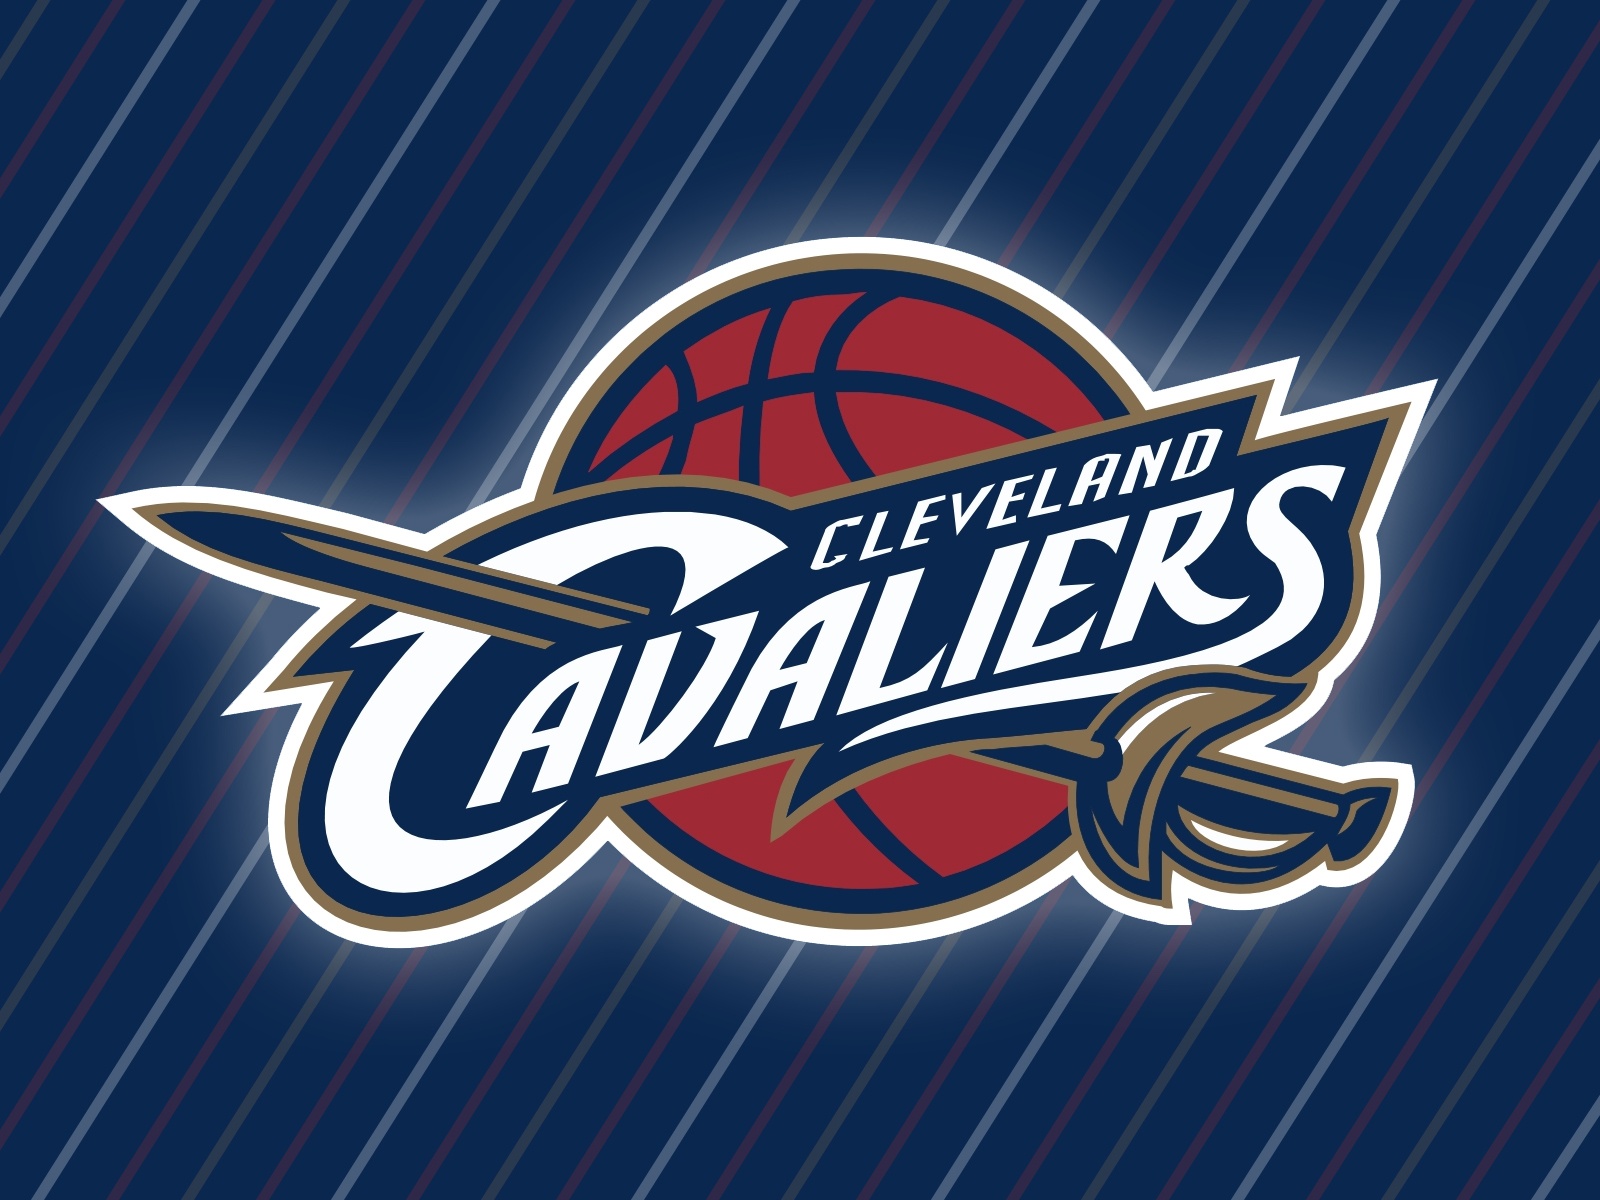 Cleveland Cavaliers Logo Wallpapers Free Download Pixelstalk Net Images, Photos, Reviews